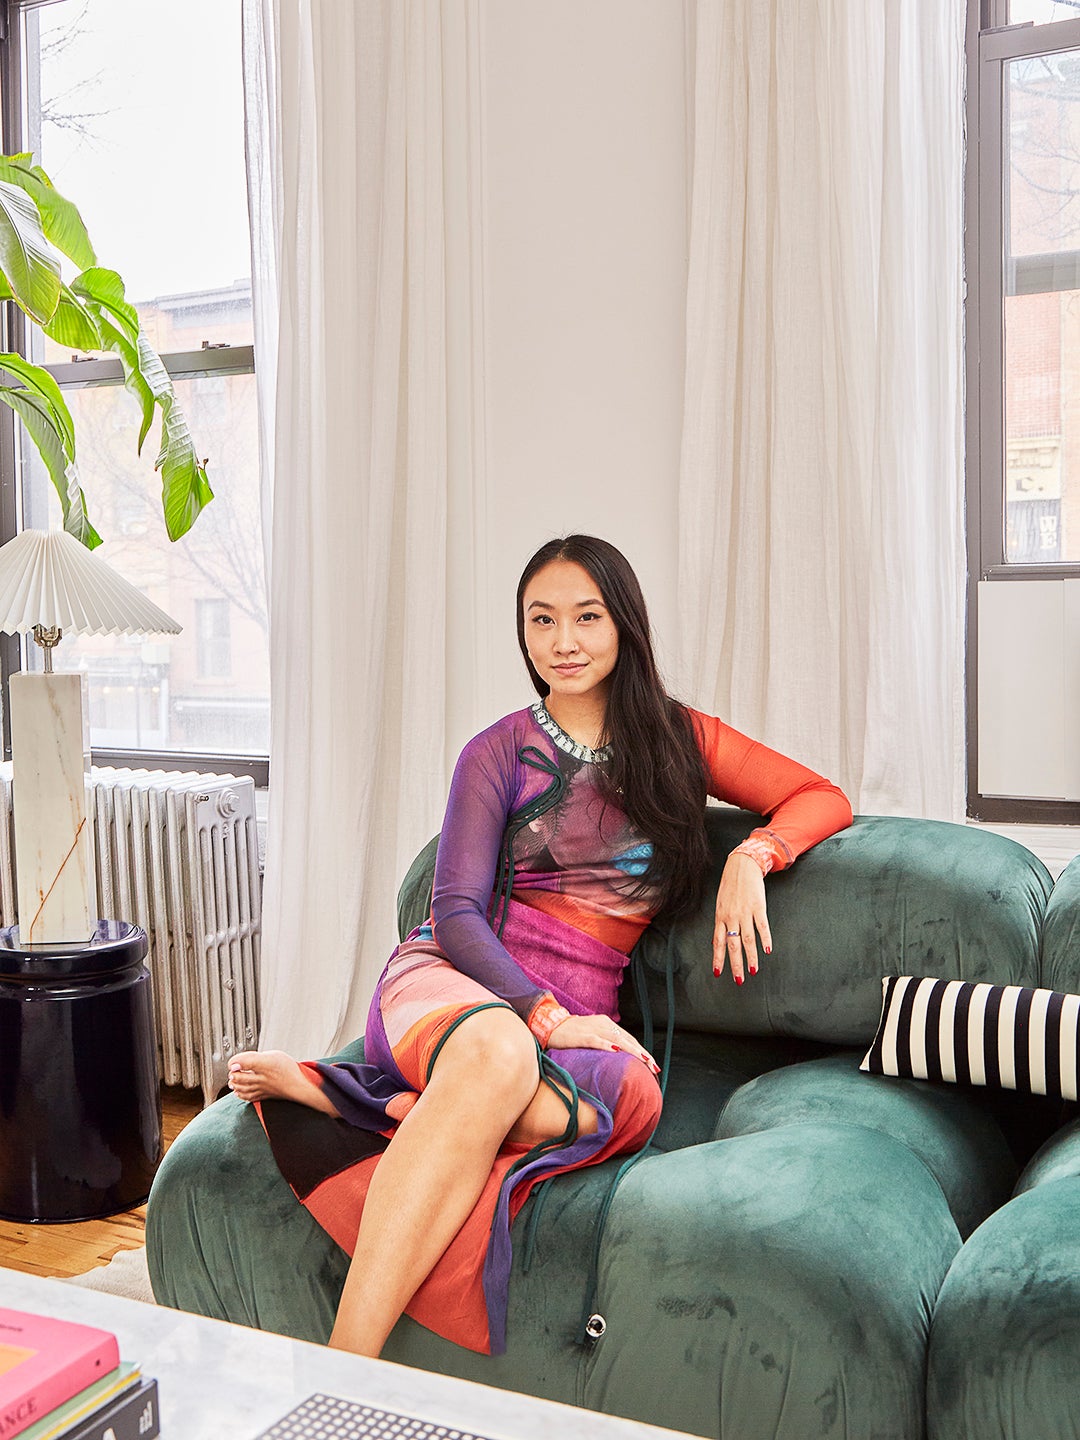 Naomi Otsu Designed Her Living Room Around Her Love of Sitting on the Floor